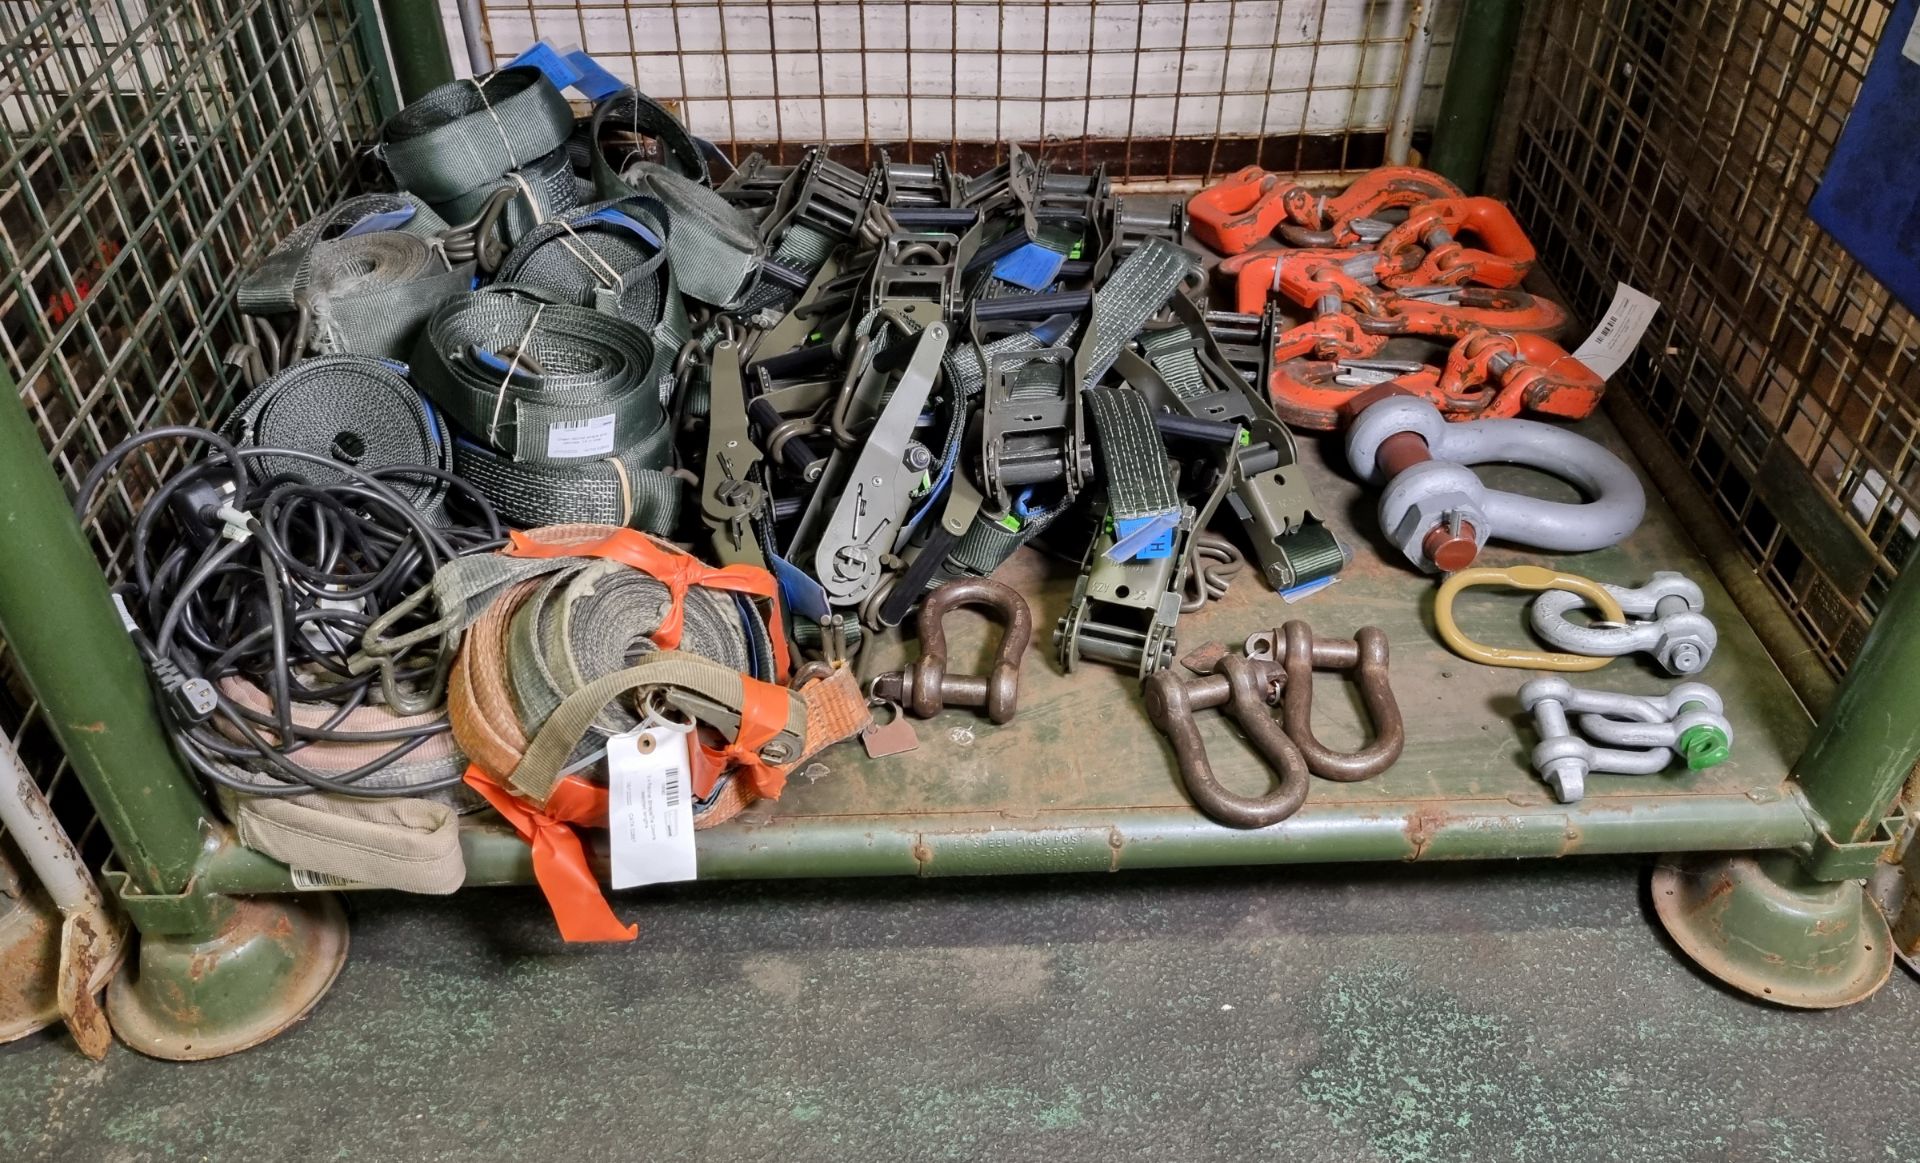 Lifting equipment inc,Hook's, large/small couplings - 7 units total, Green ratchet straps - Bild 2 aus 5